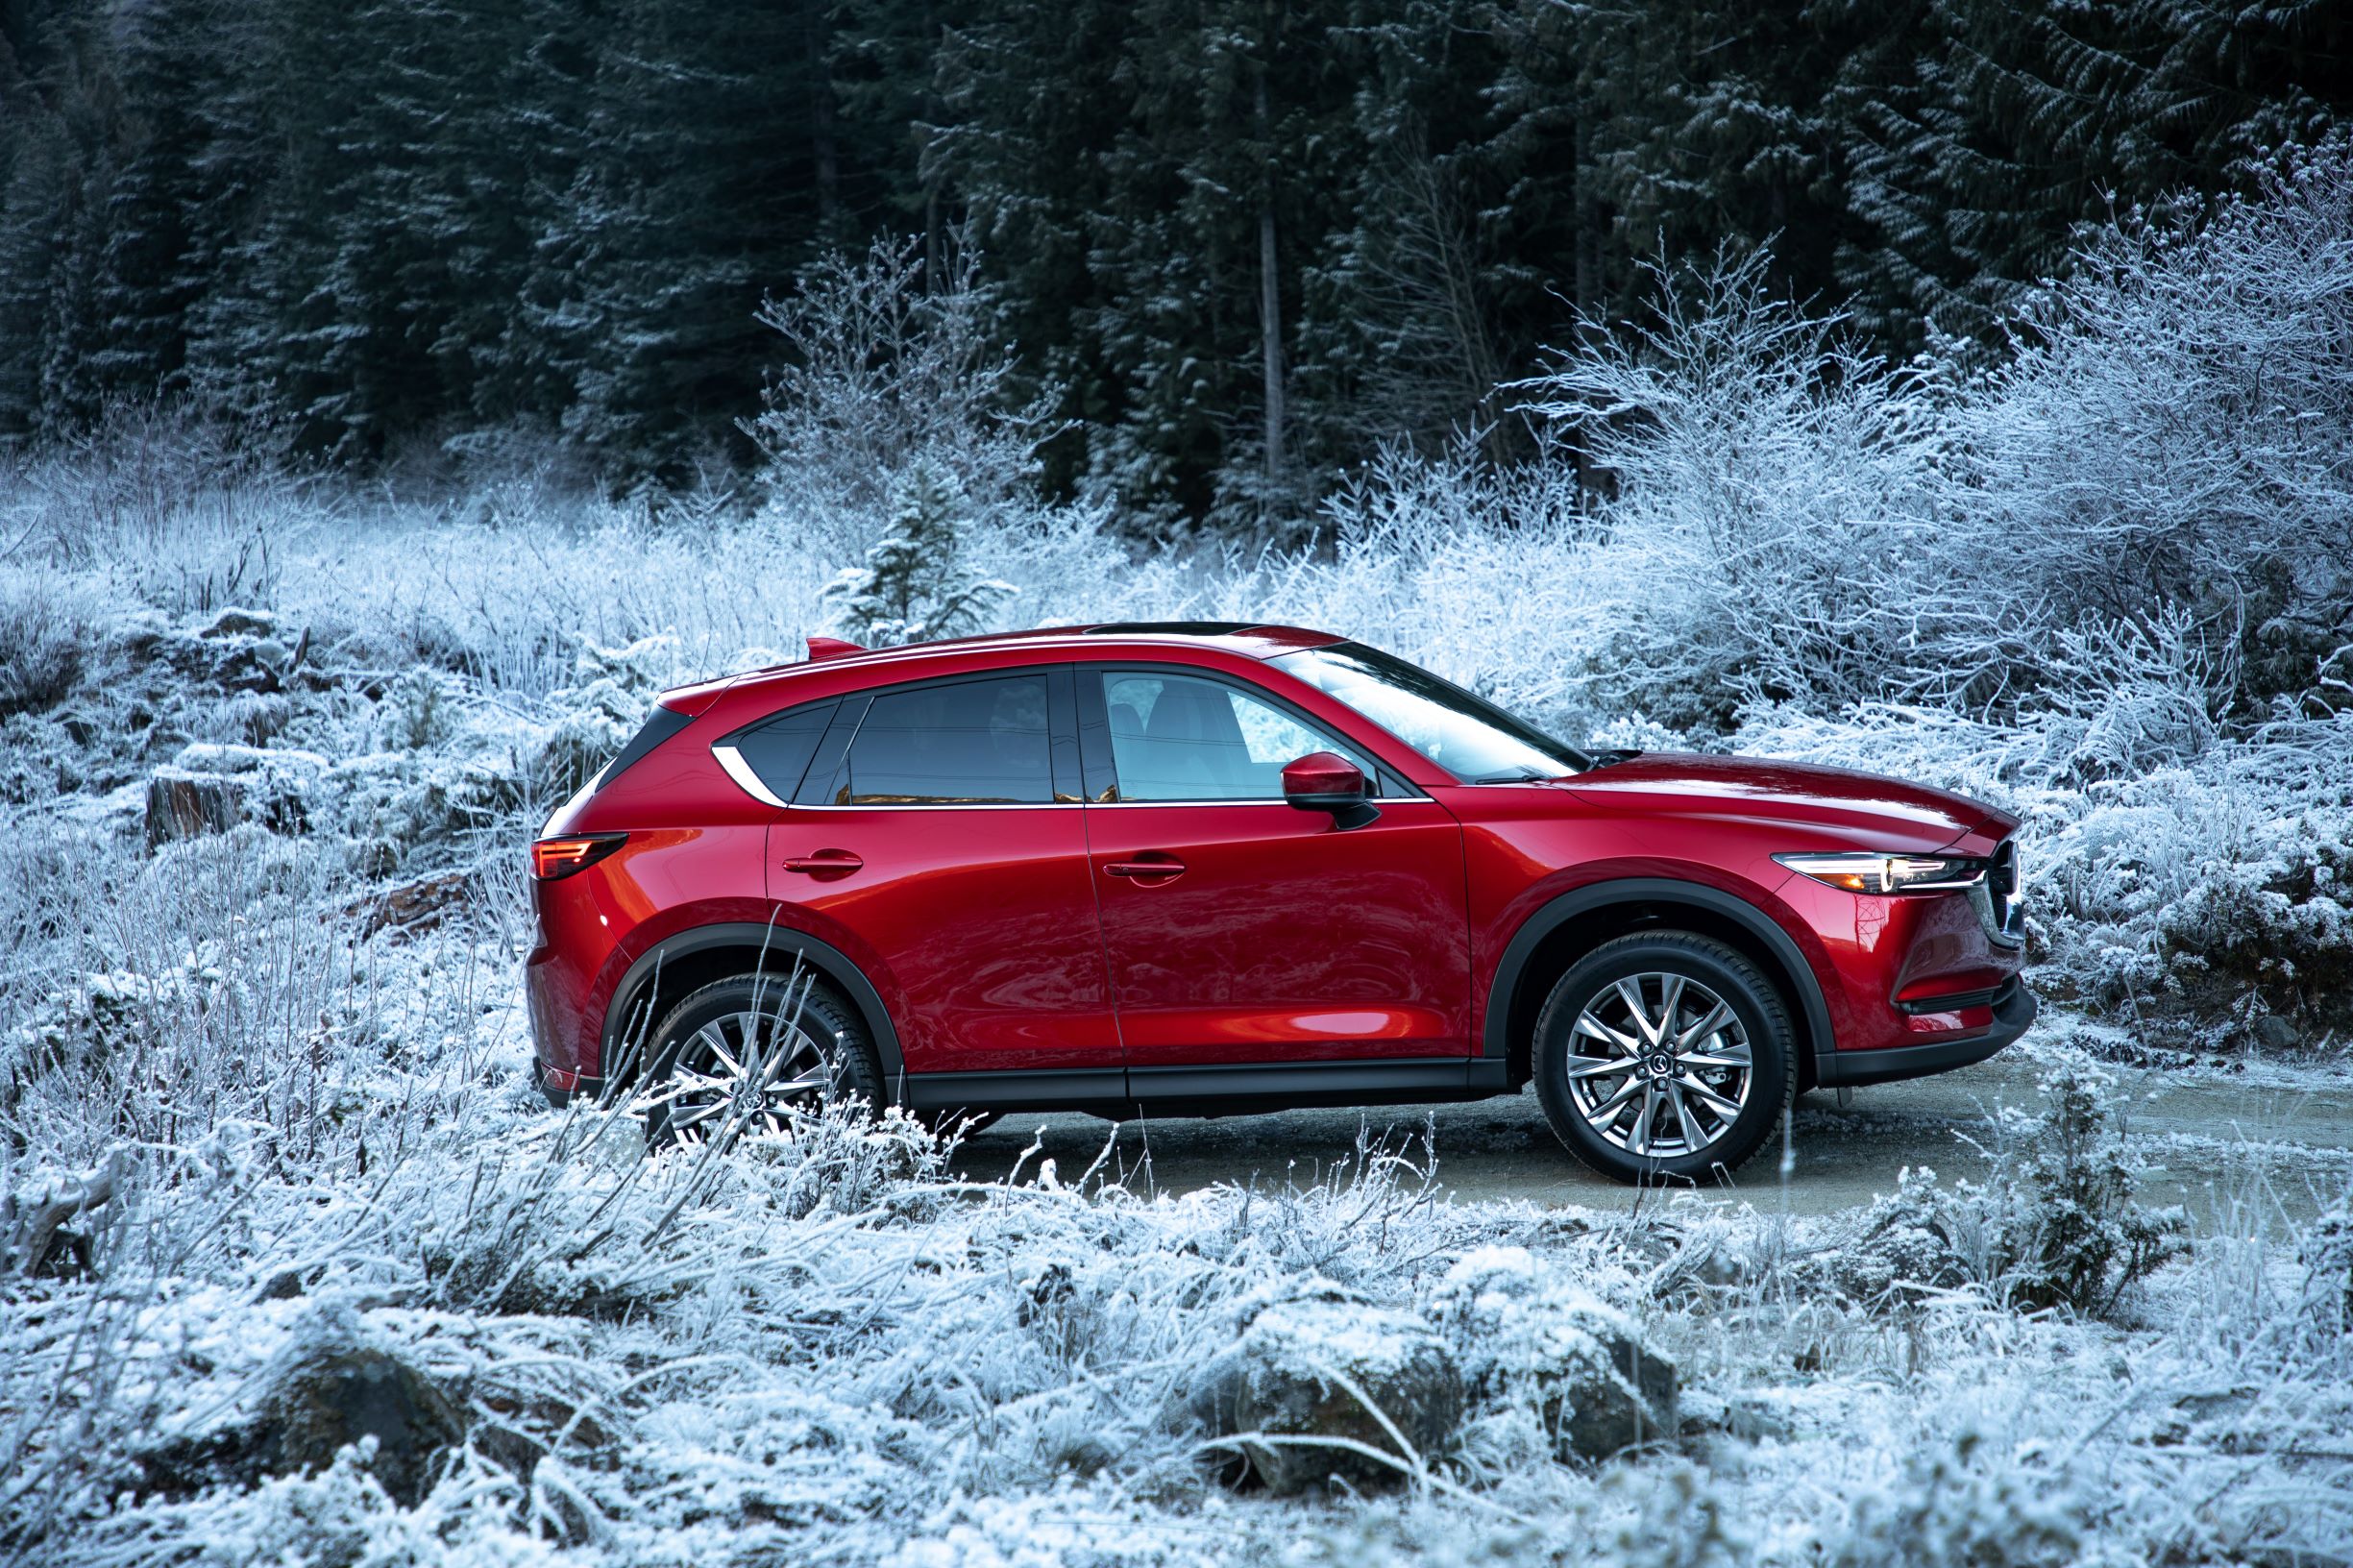 Mazda CX-5 2020 rouge dans la neige